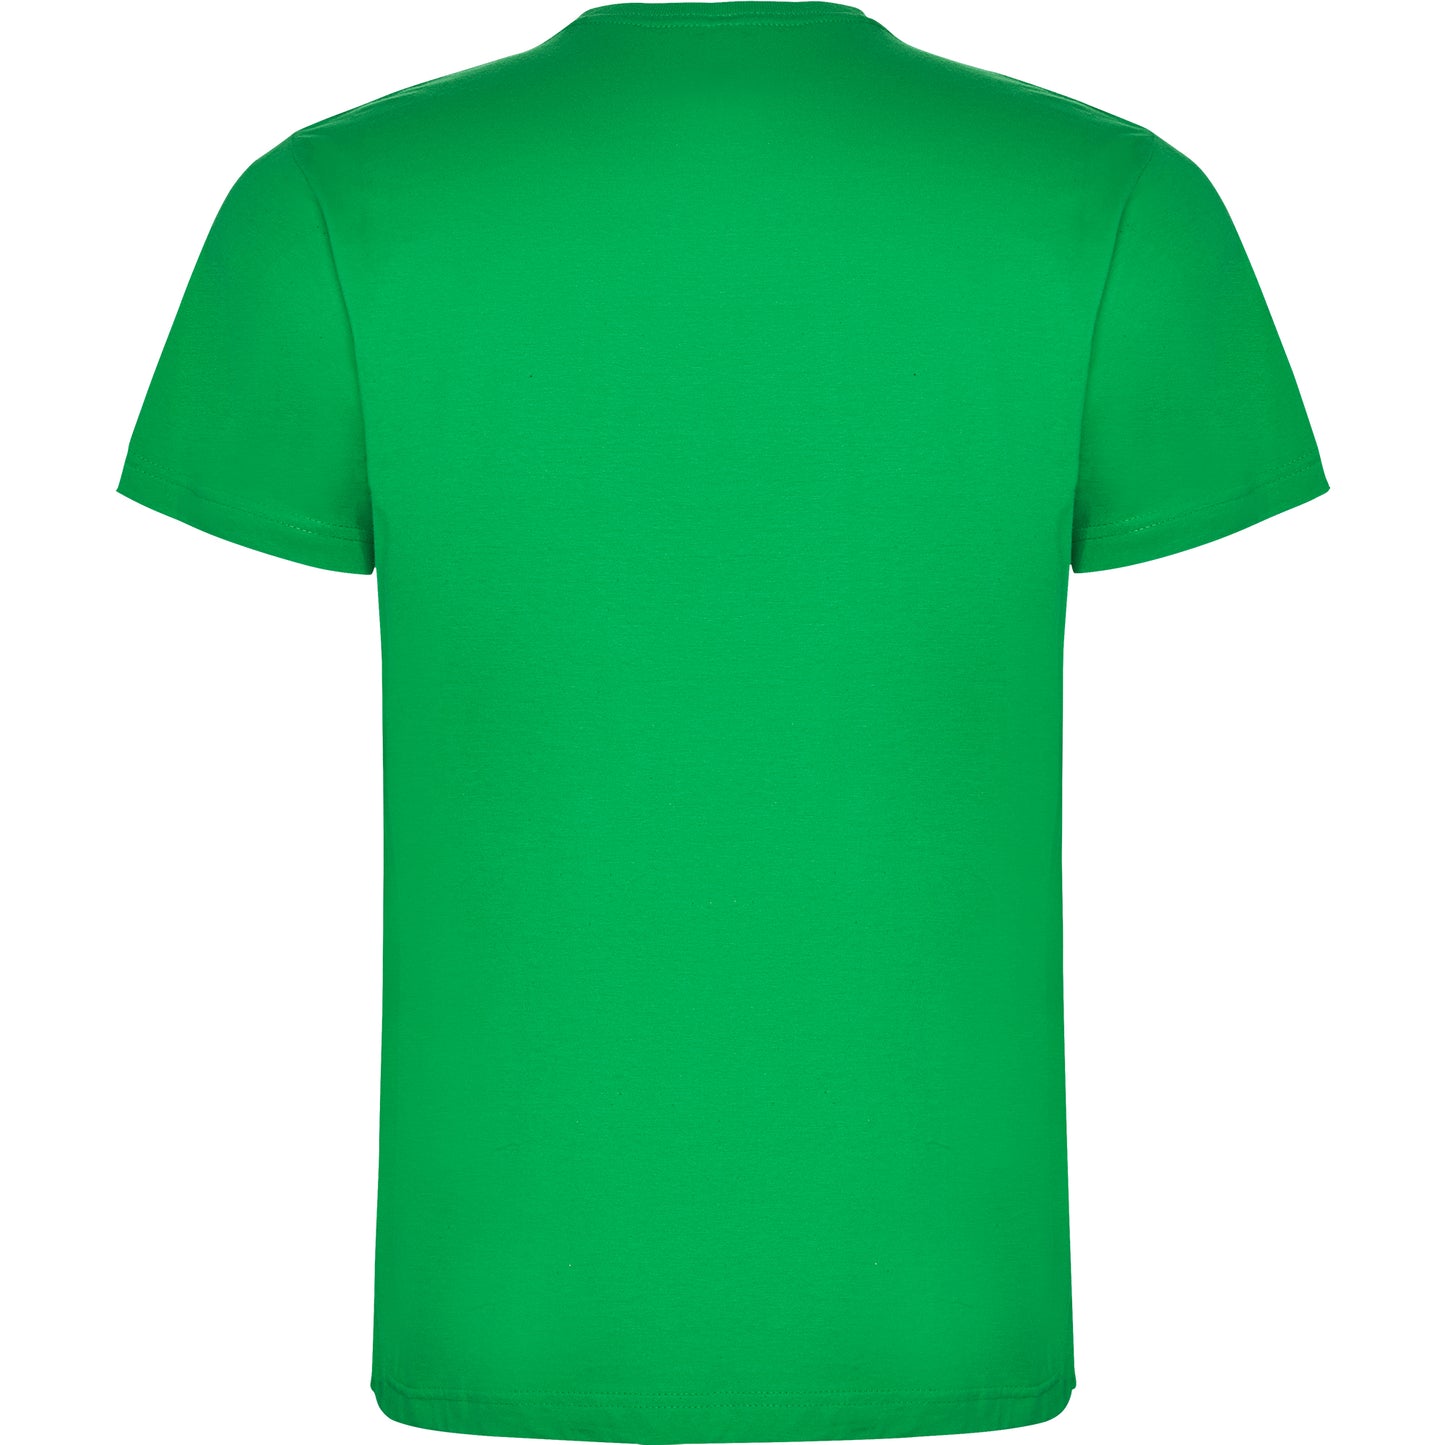 Dogo Premium T-shirt Irish Green